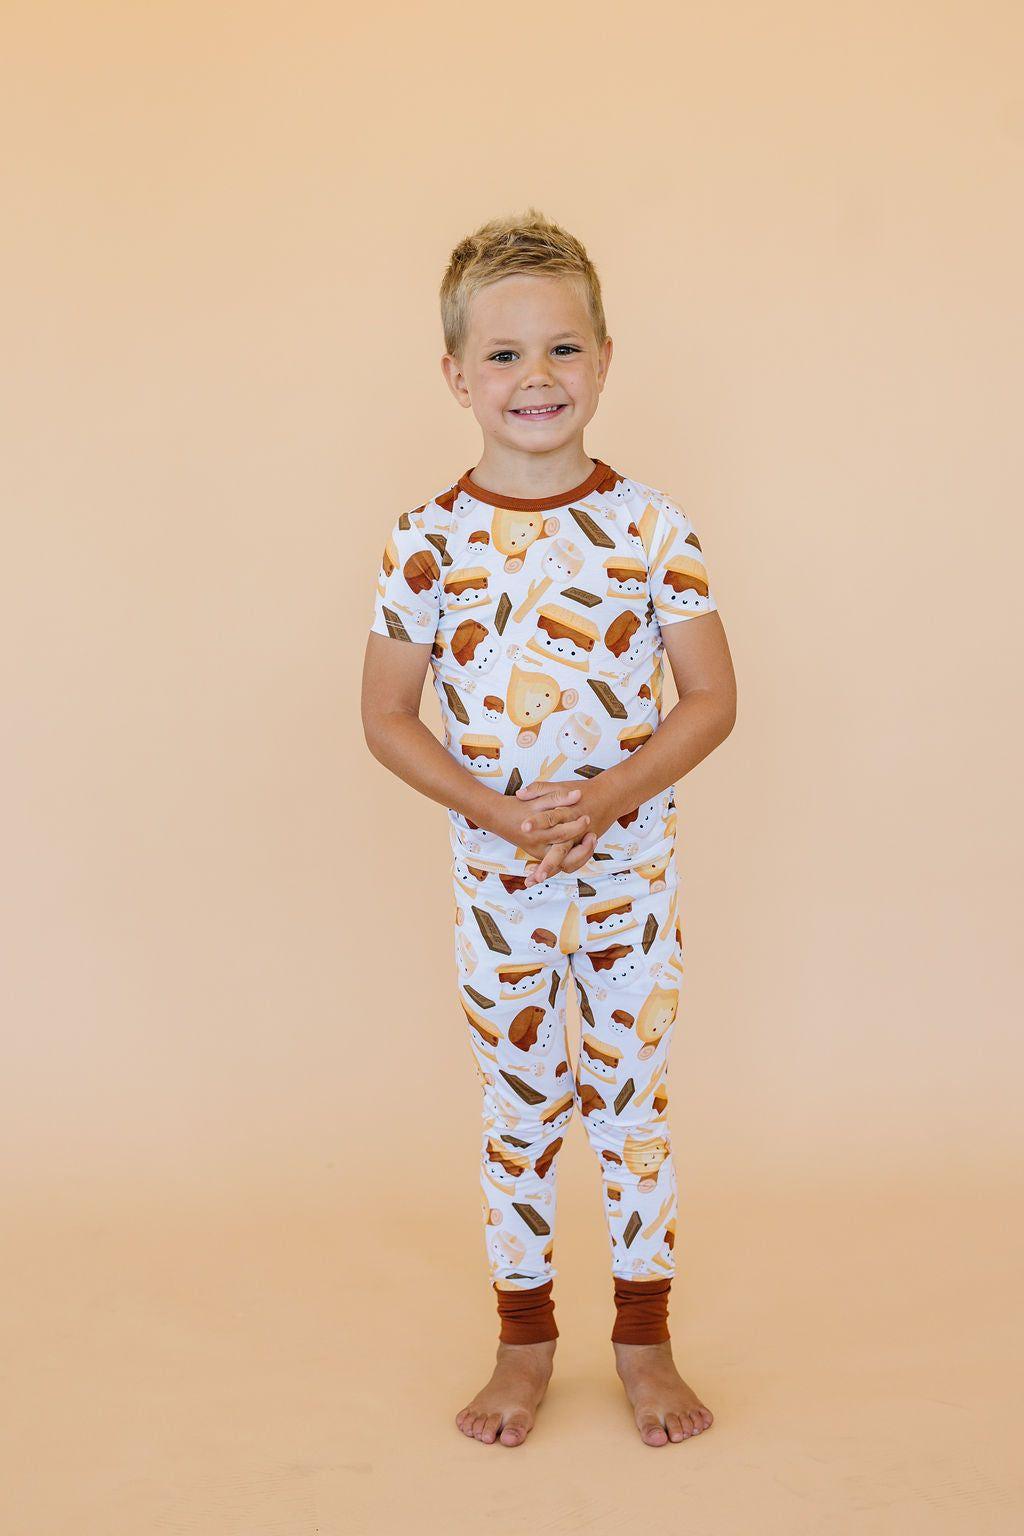 S'mores Print Bamboo Kids Pajama Set - Short Sleeve &amp; Pants - Sophia Rose Children's Boutique